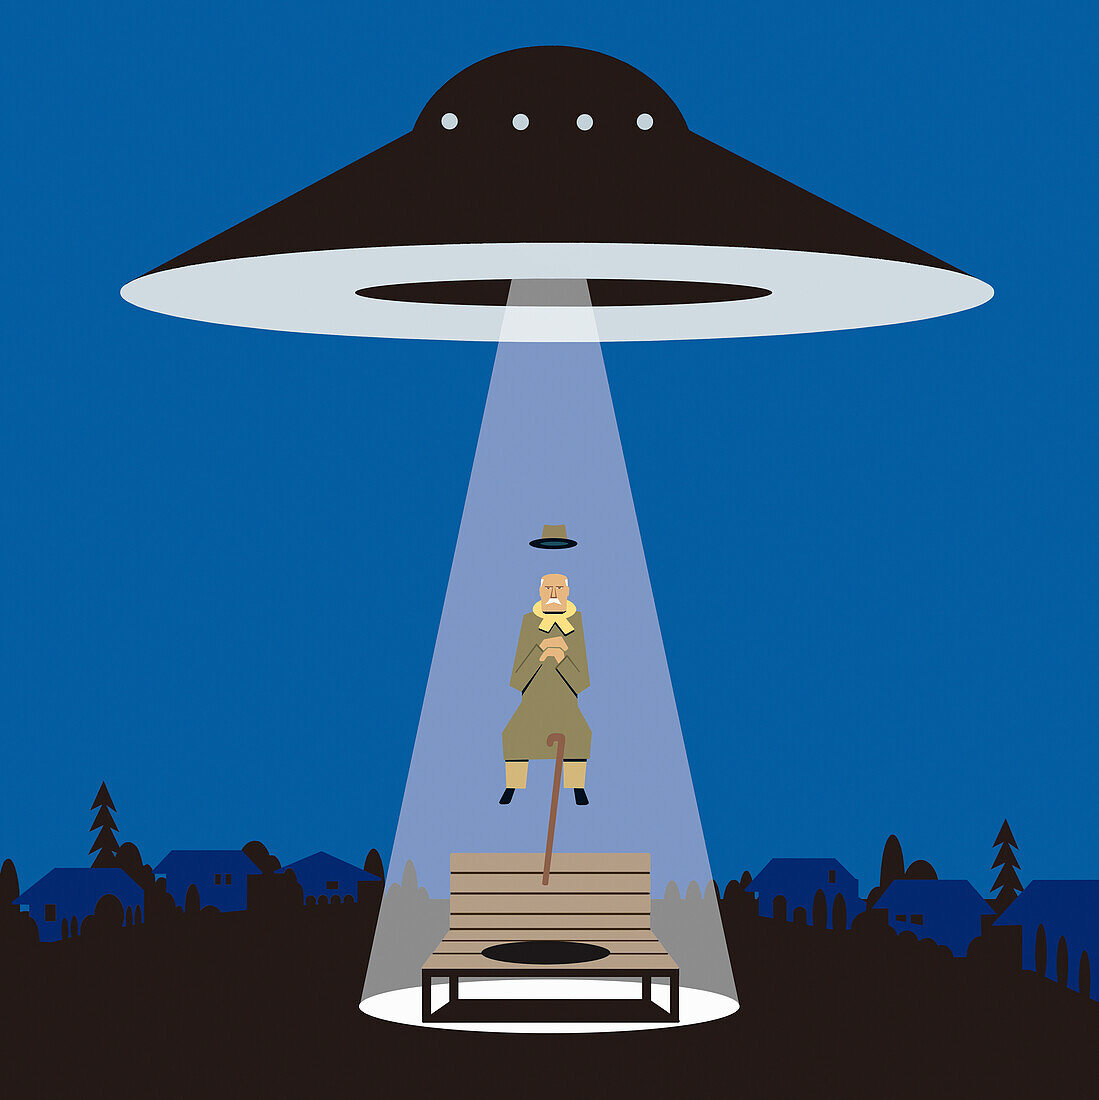 Elderly man being abducted by spaceship, illustration